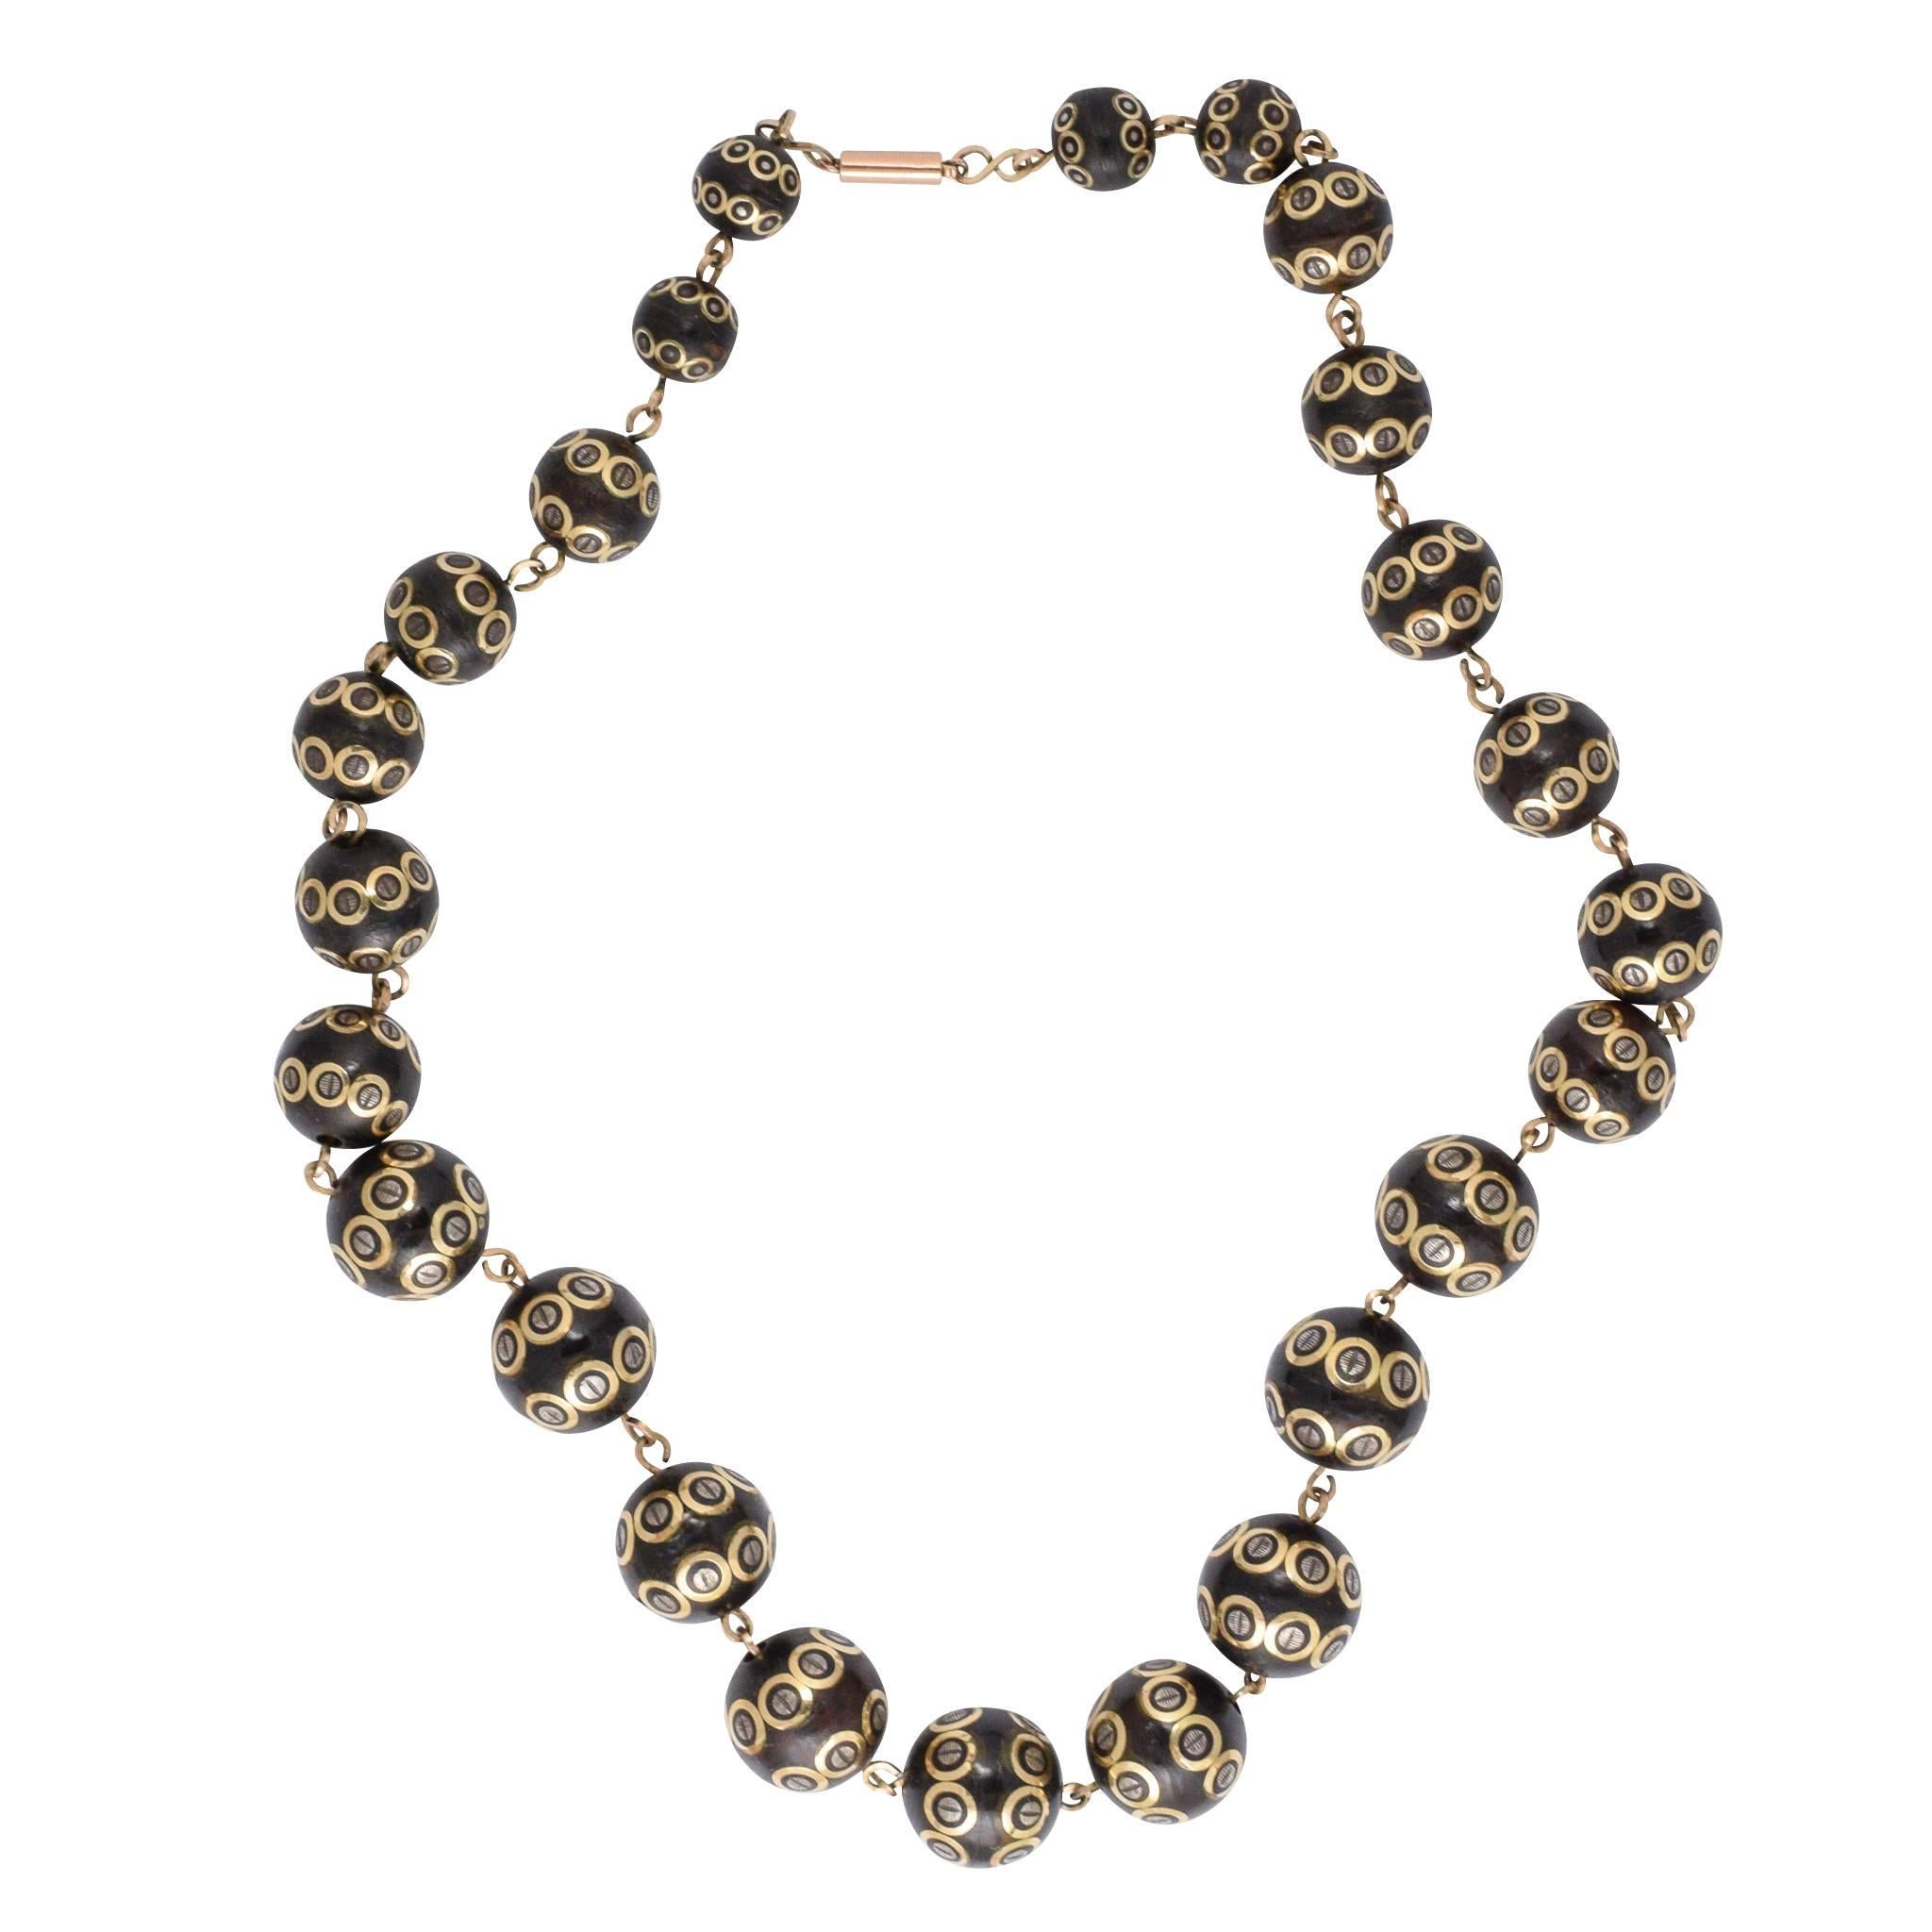 Antique Mid-Victorian Tortoiseshell Pique Bead Necklace